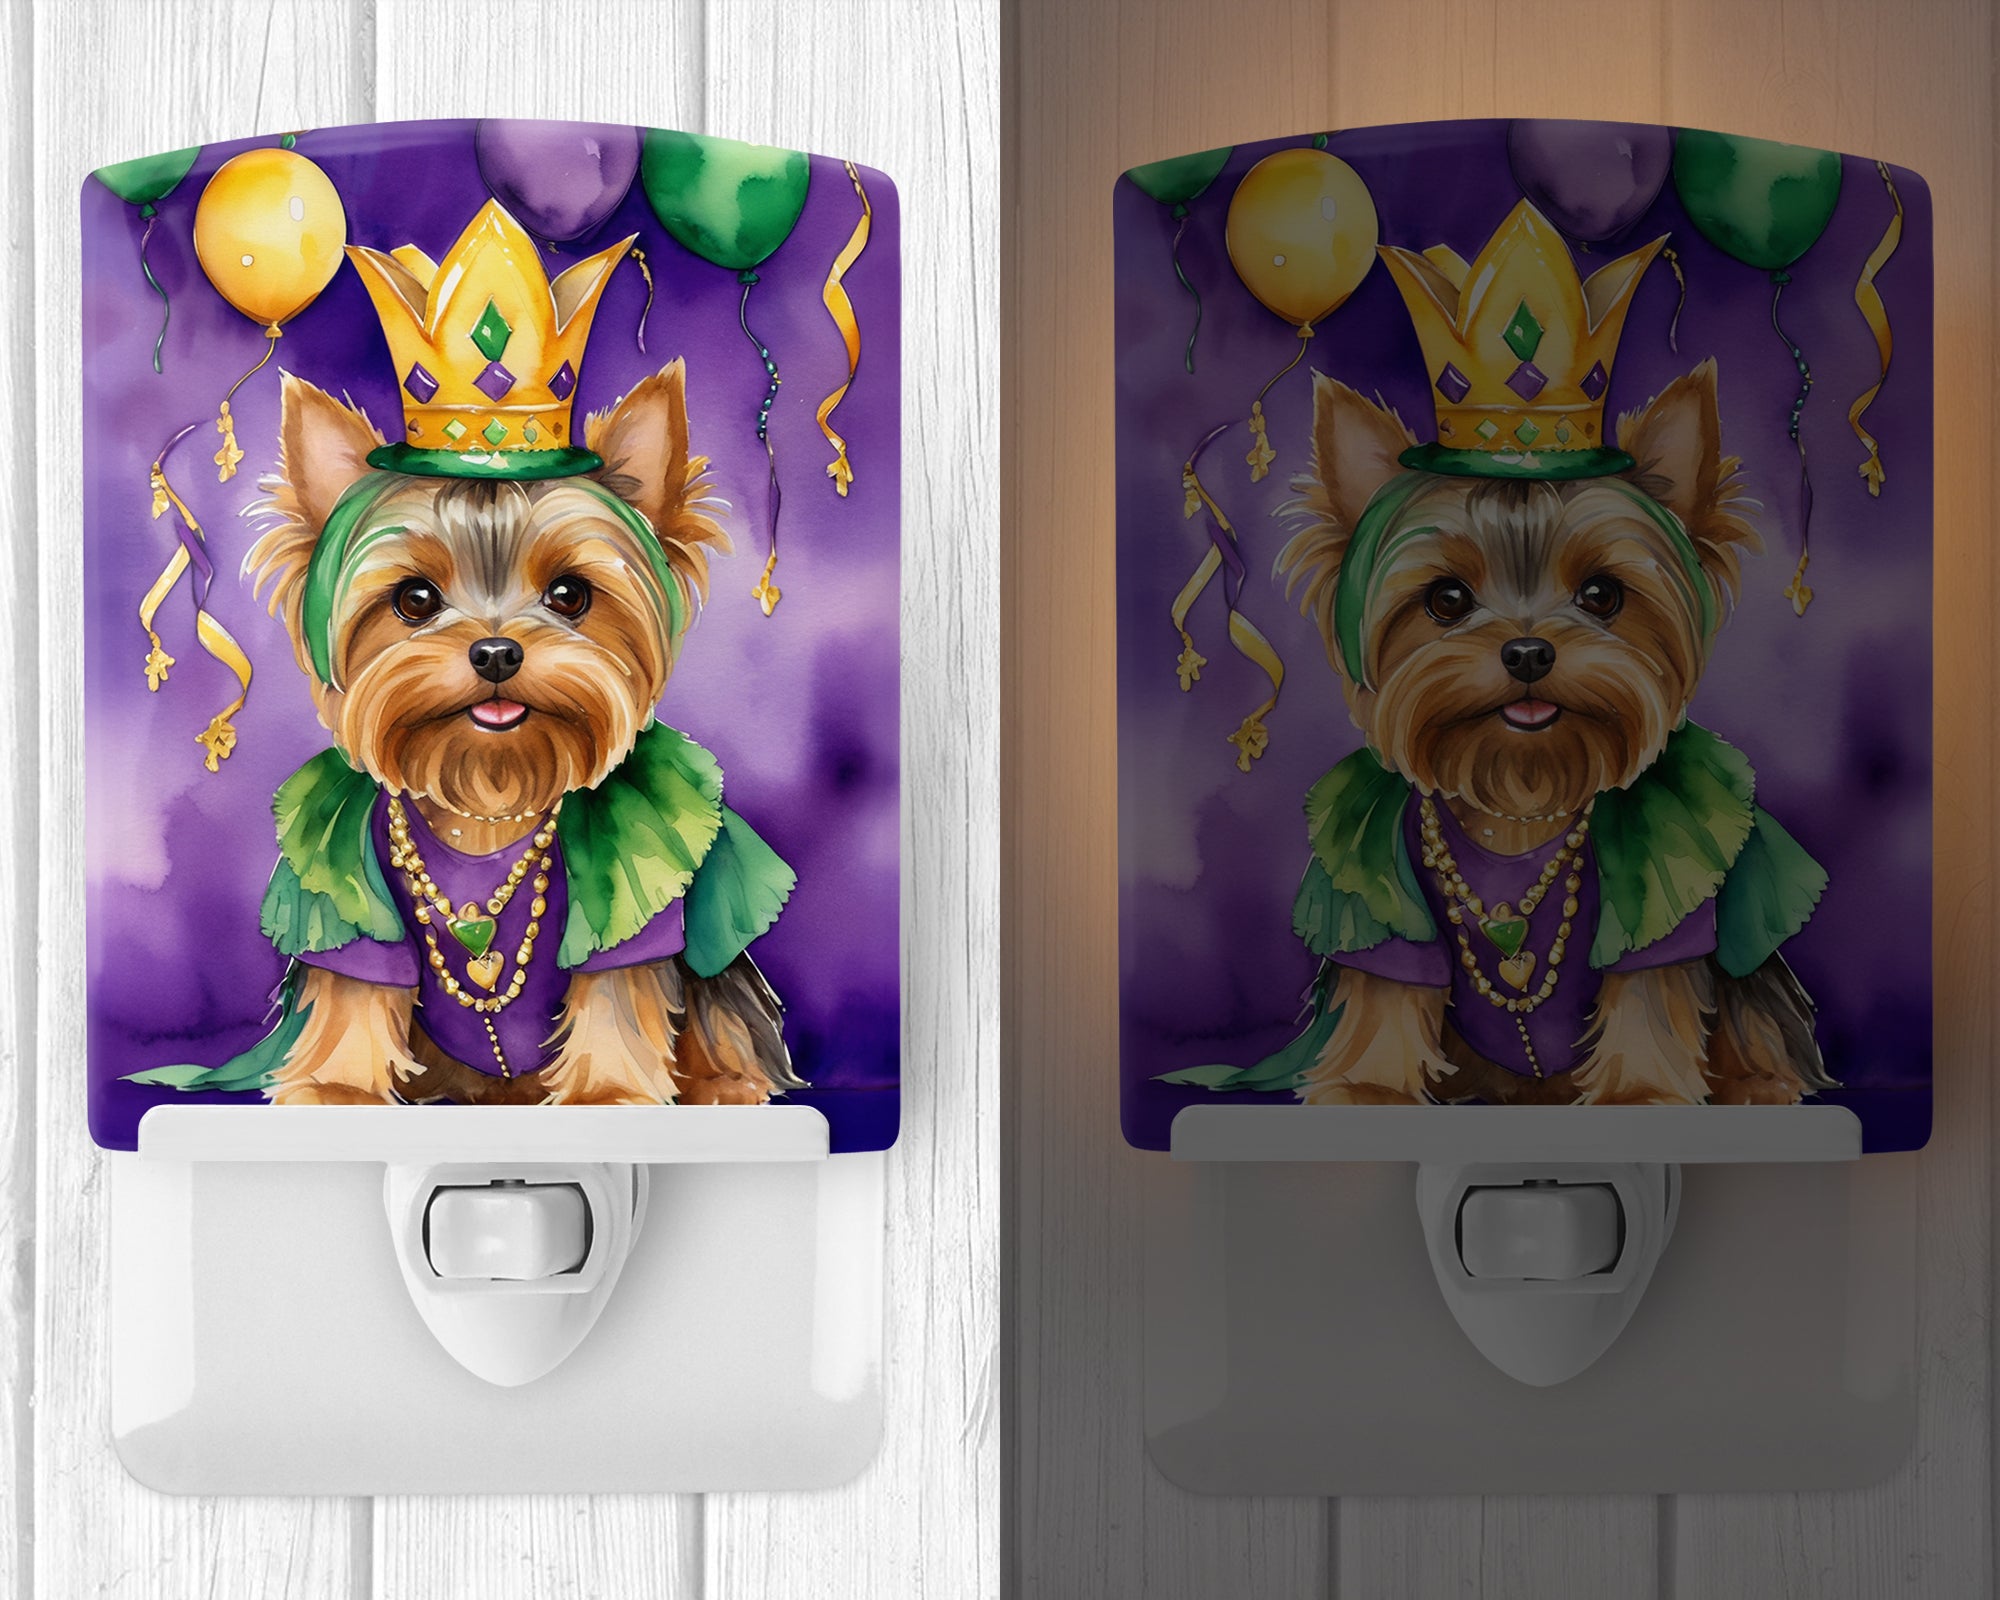 Buy this Yorkshire Terrier King of Mardi Gras Ceramic Night Light